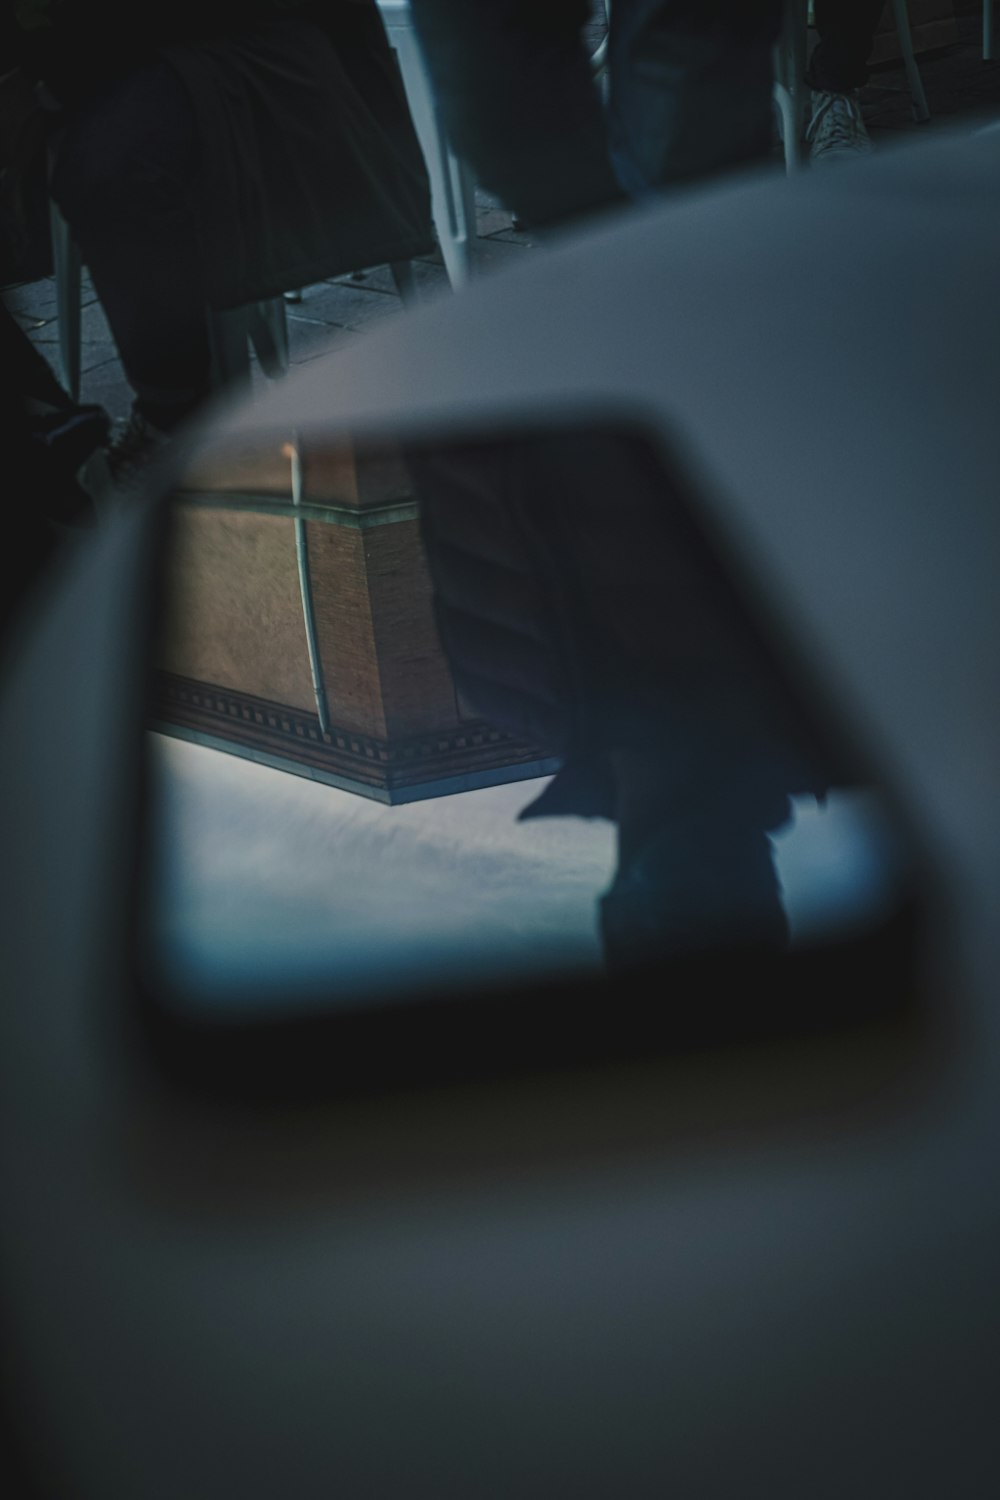 Un reflejo de una maleta en un espejo retrovisor